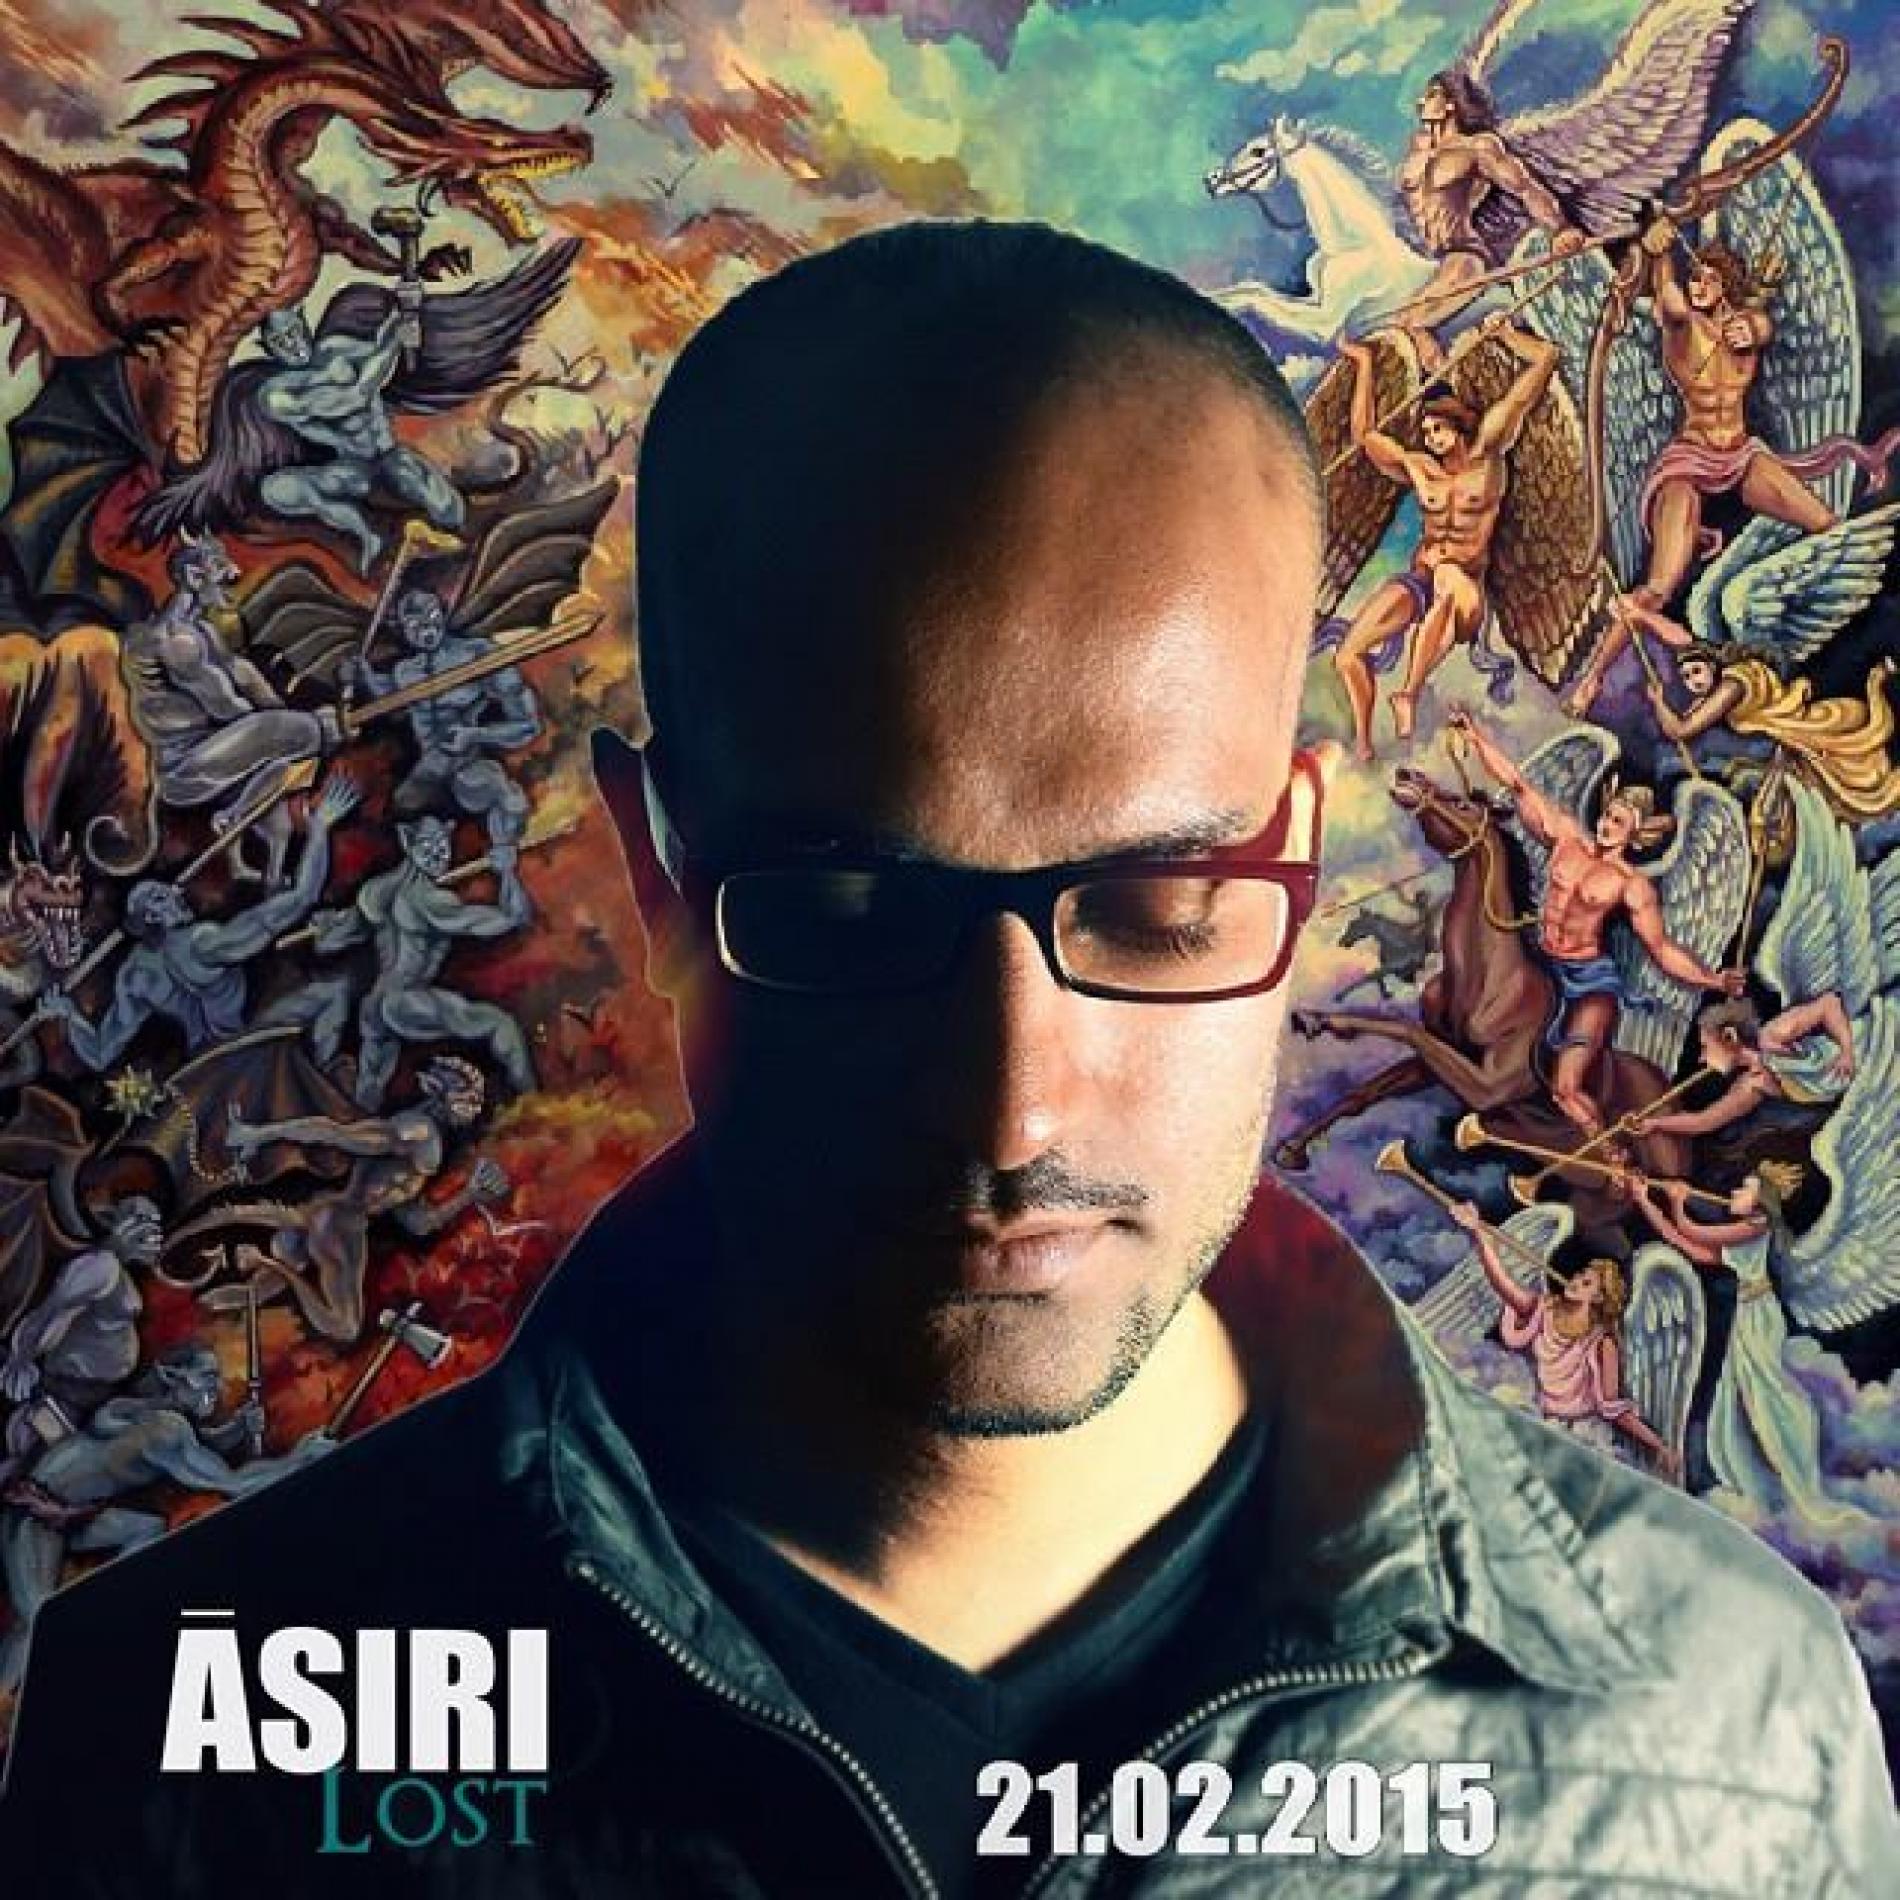 Asiri: “Lost” Album Teaser